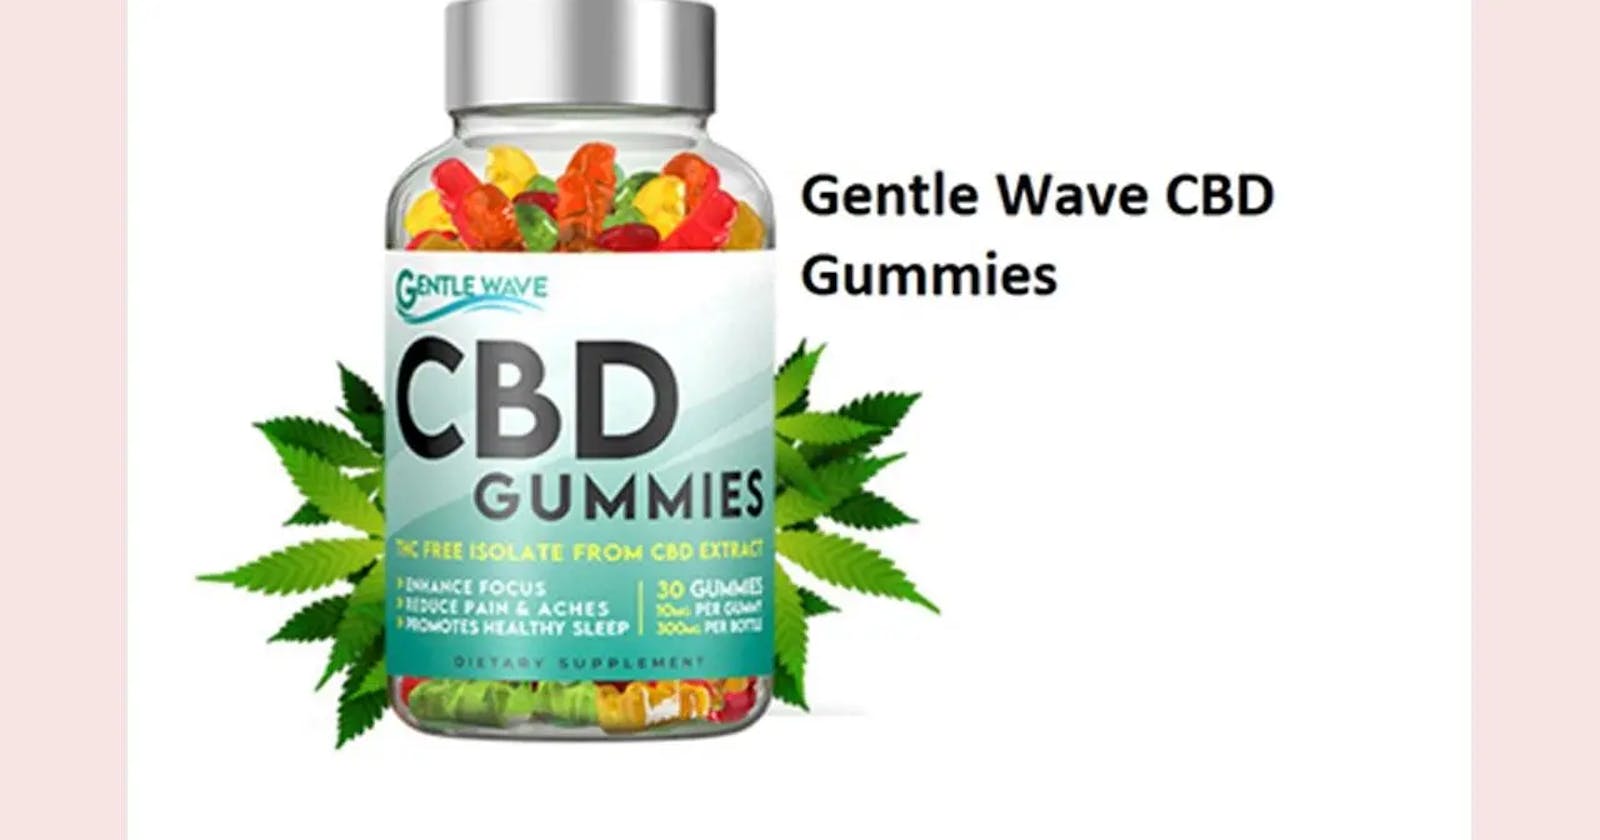 Wave CBD Gummies Reviews - CBD Hemp Gummies for Pain & Anxiety!{Gentle Wave CBD Gummies for Sleep}, Benefits & Cost